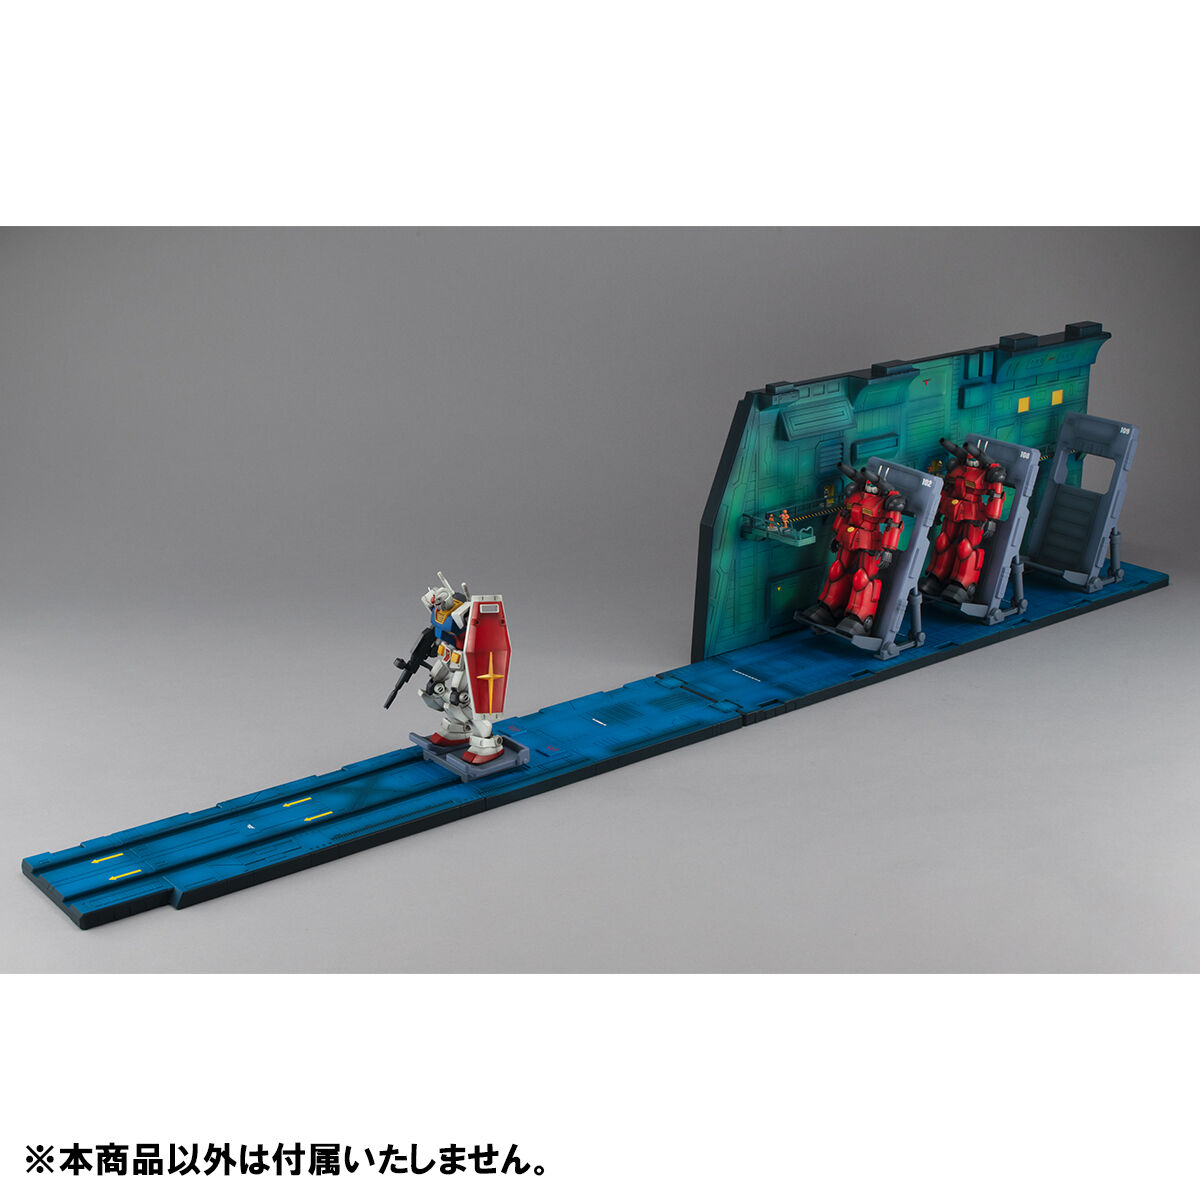 P-Bandai: HG 1/144 Realistic Model Series MS Gundam White Base Catapult Deck ANIME EDITION - 05